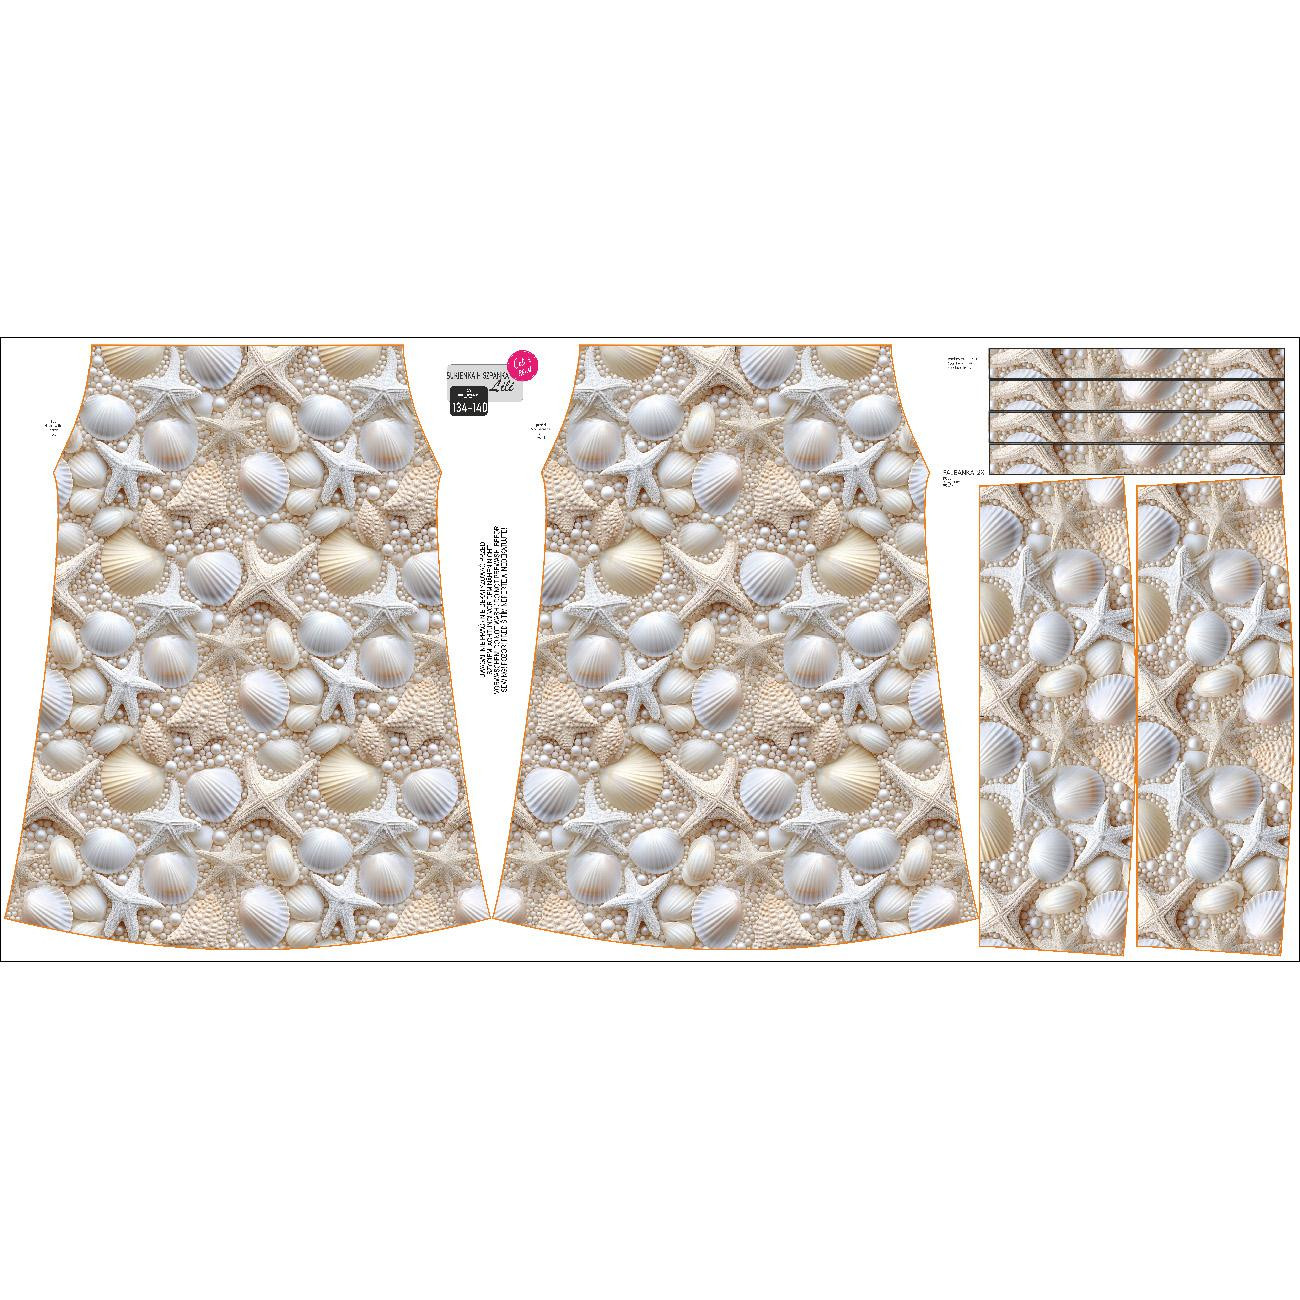 Bardot neckline dress (LILI) - SEA WORLD pat. 5 - sewing set